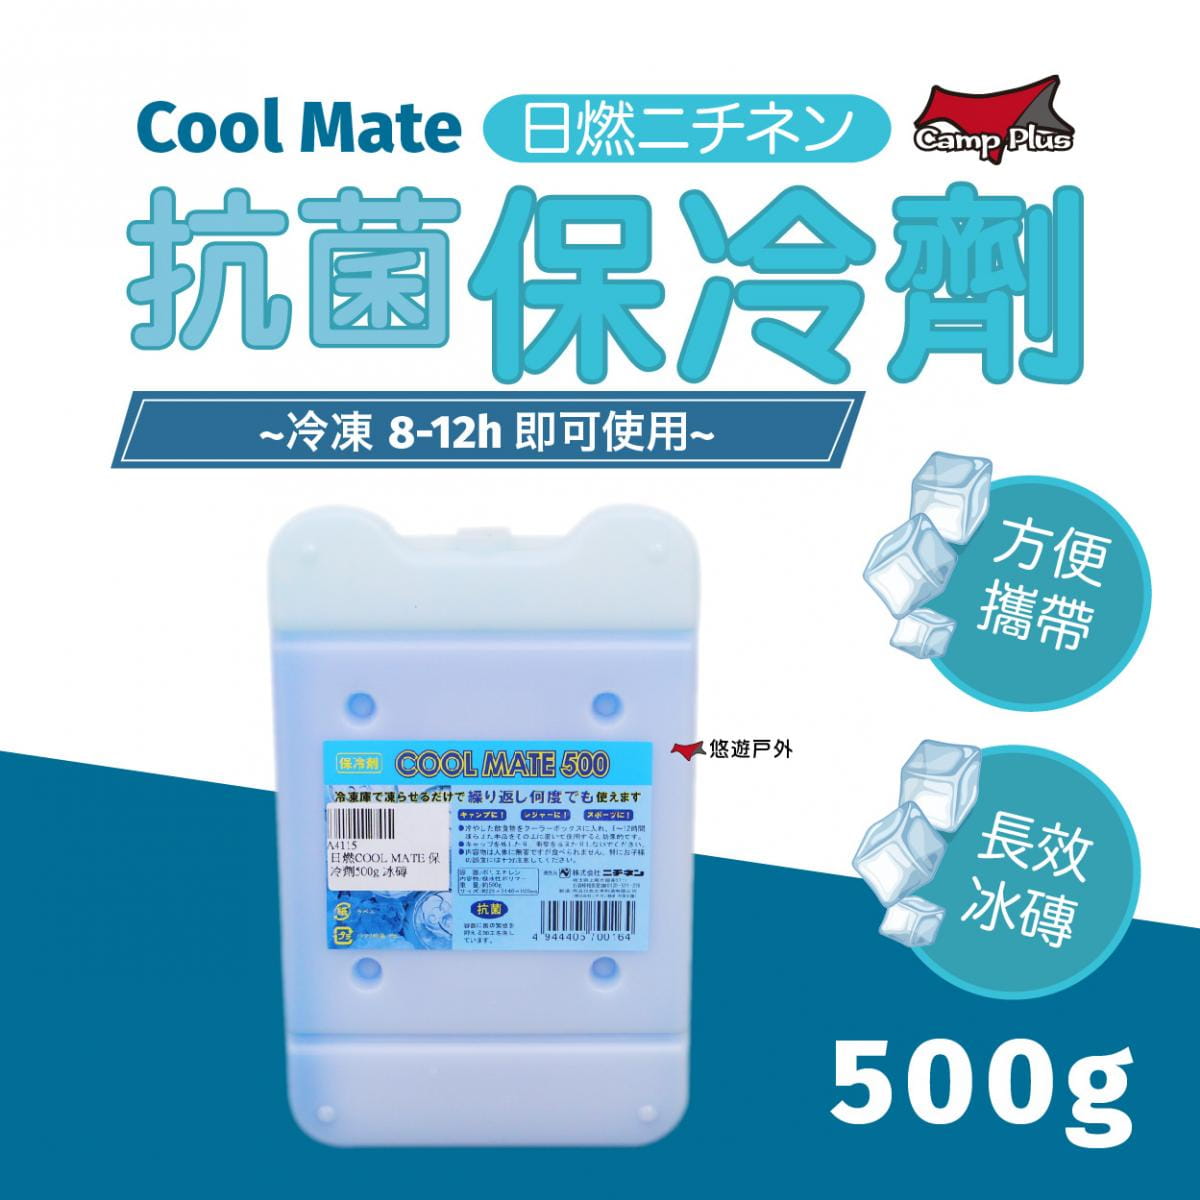 【Camp Plus】COOL MATE 抗菌保冷劑 500g (悠遊戶外) 0